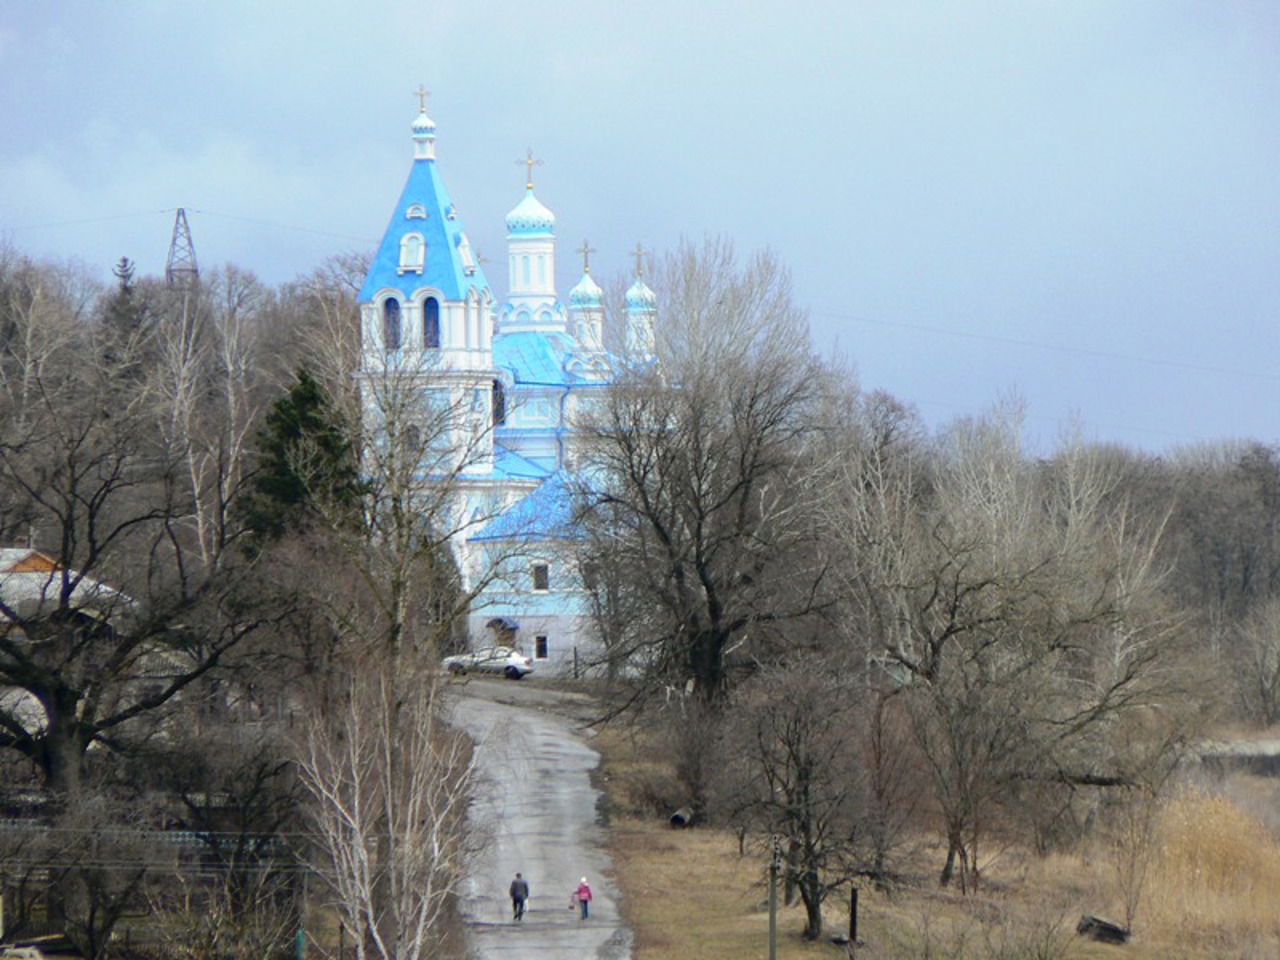 Церква Володимирської ікони Божої Матері, Кочеток